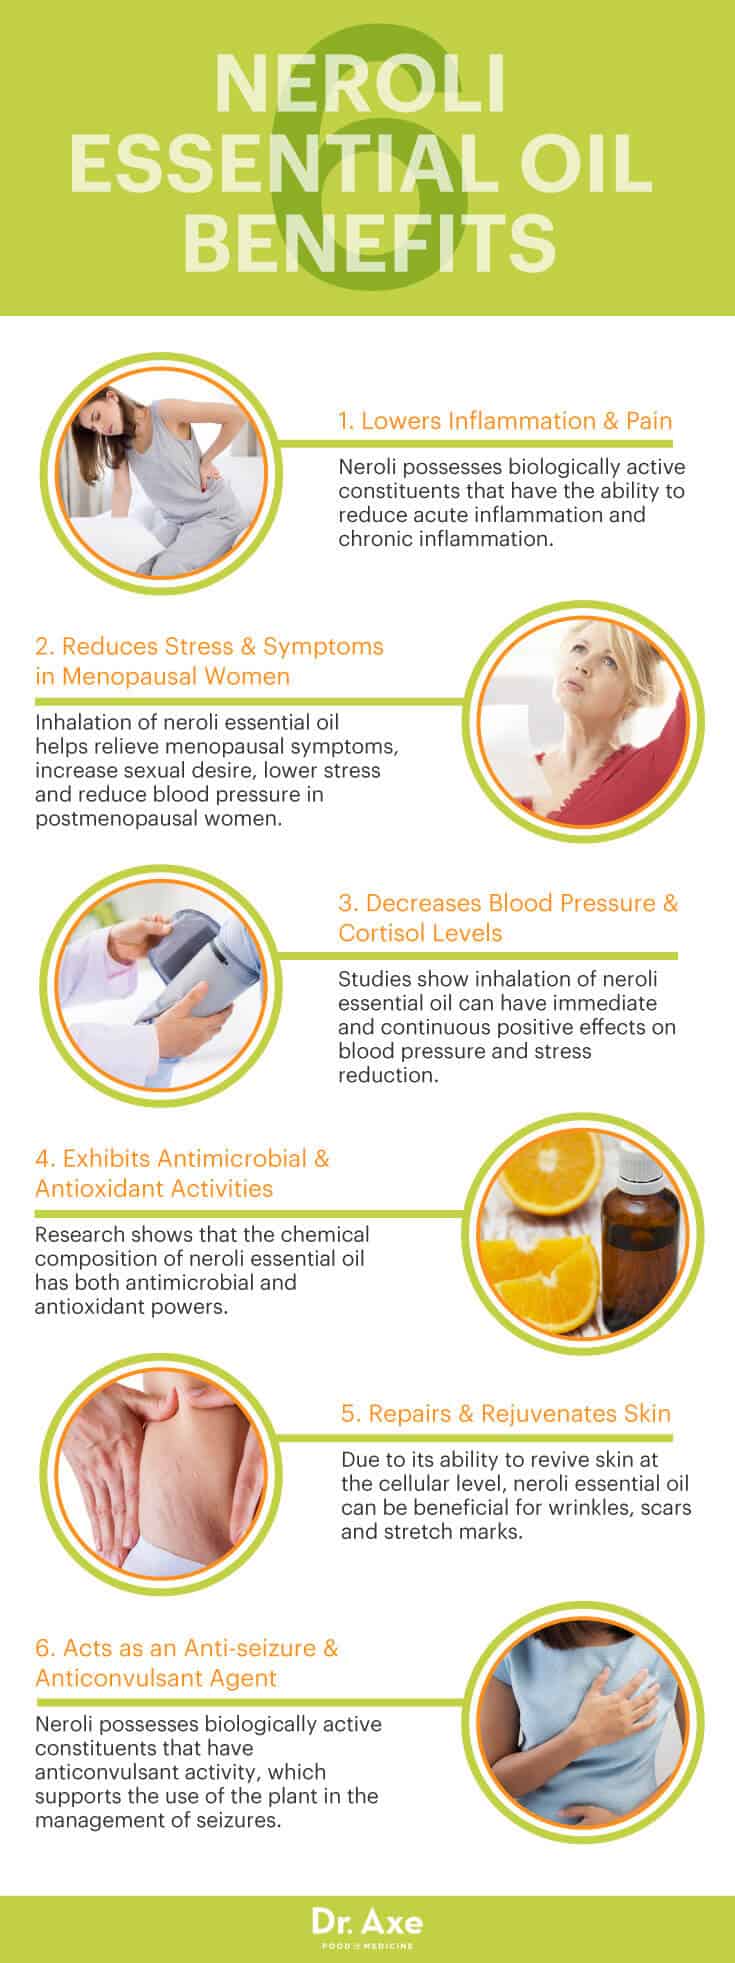 Neroli essential oil benefits - Dr. Axe